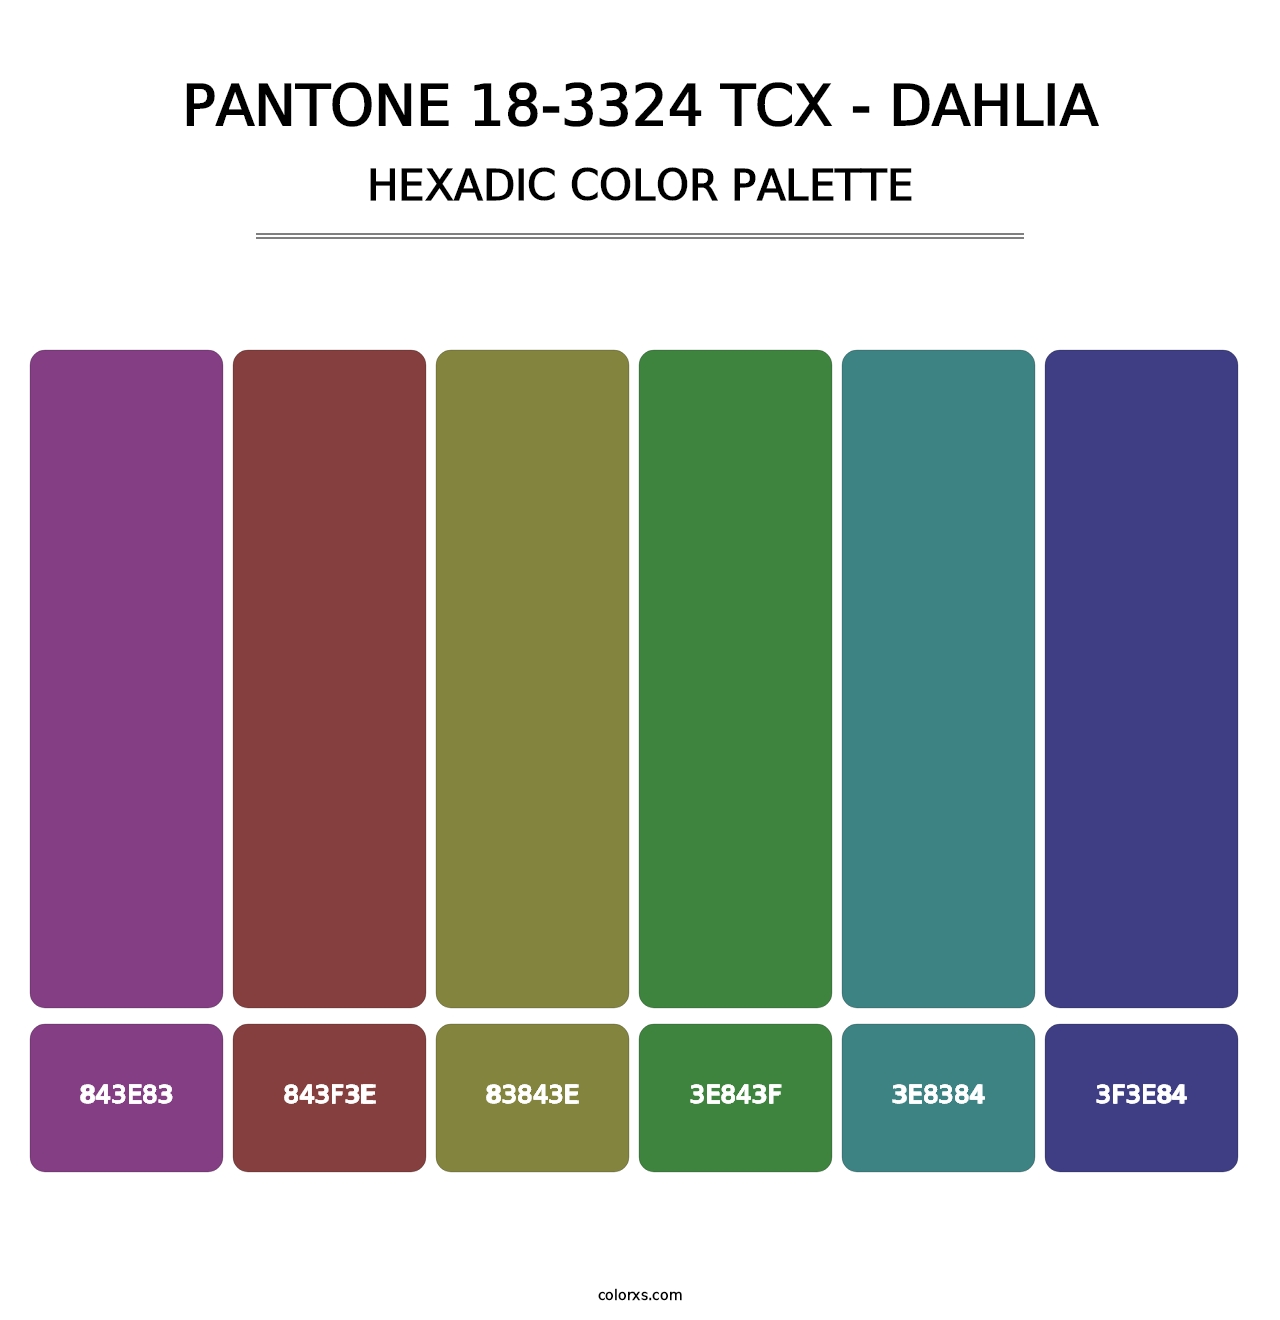 PANTONE 18-3324 TCX - Dahlia - Hexadic Color Palette